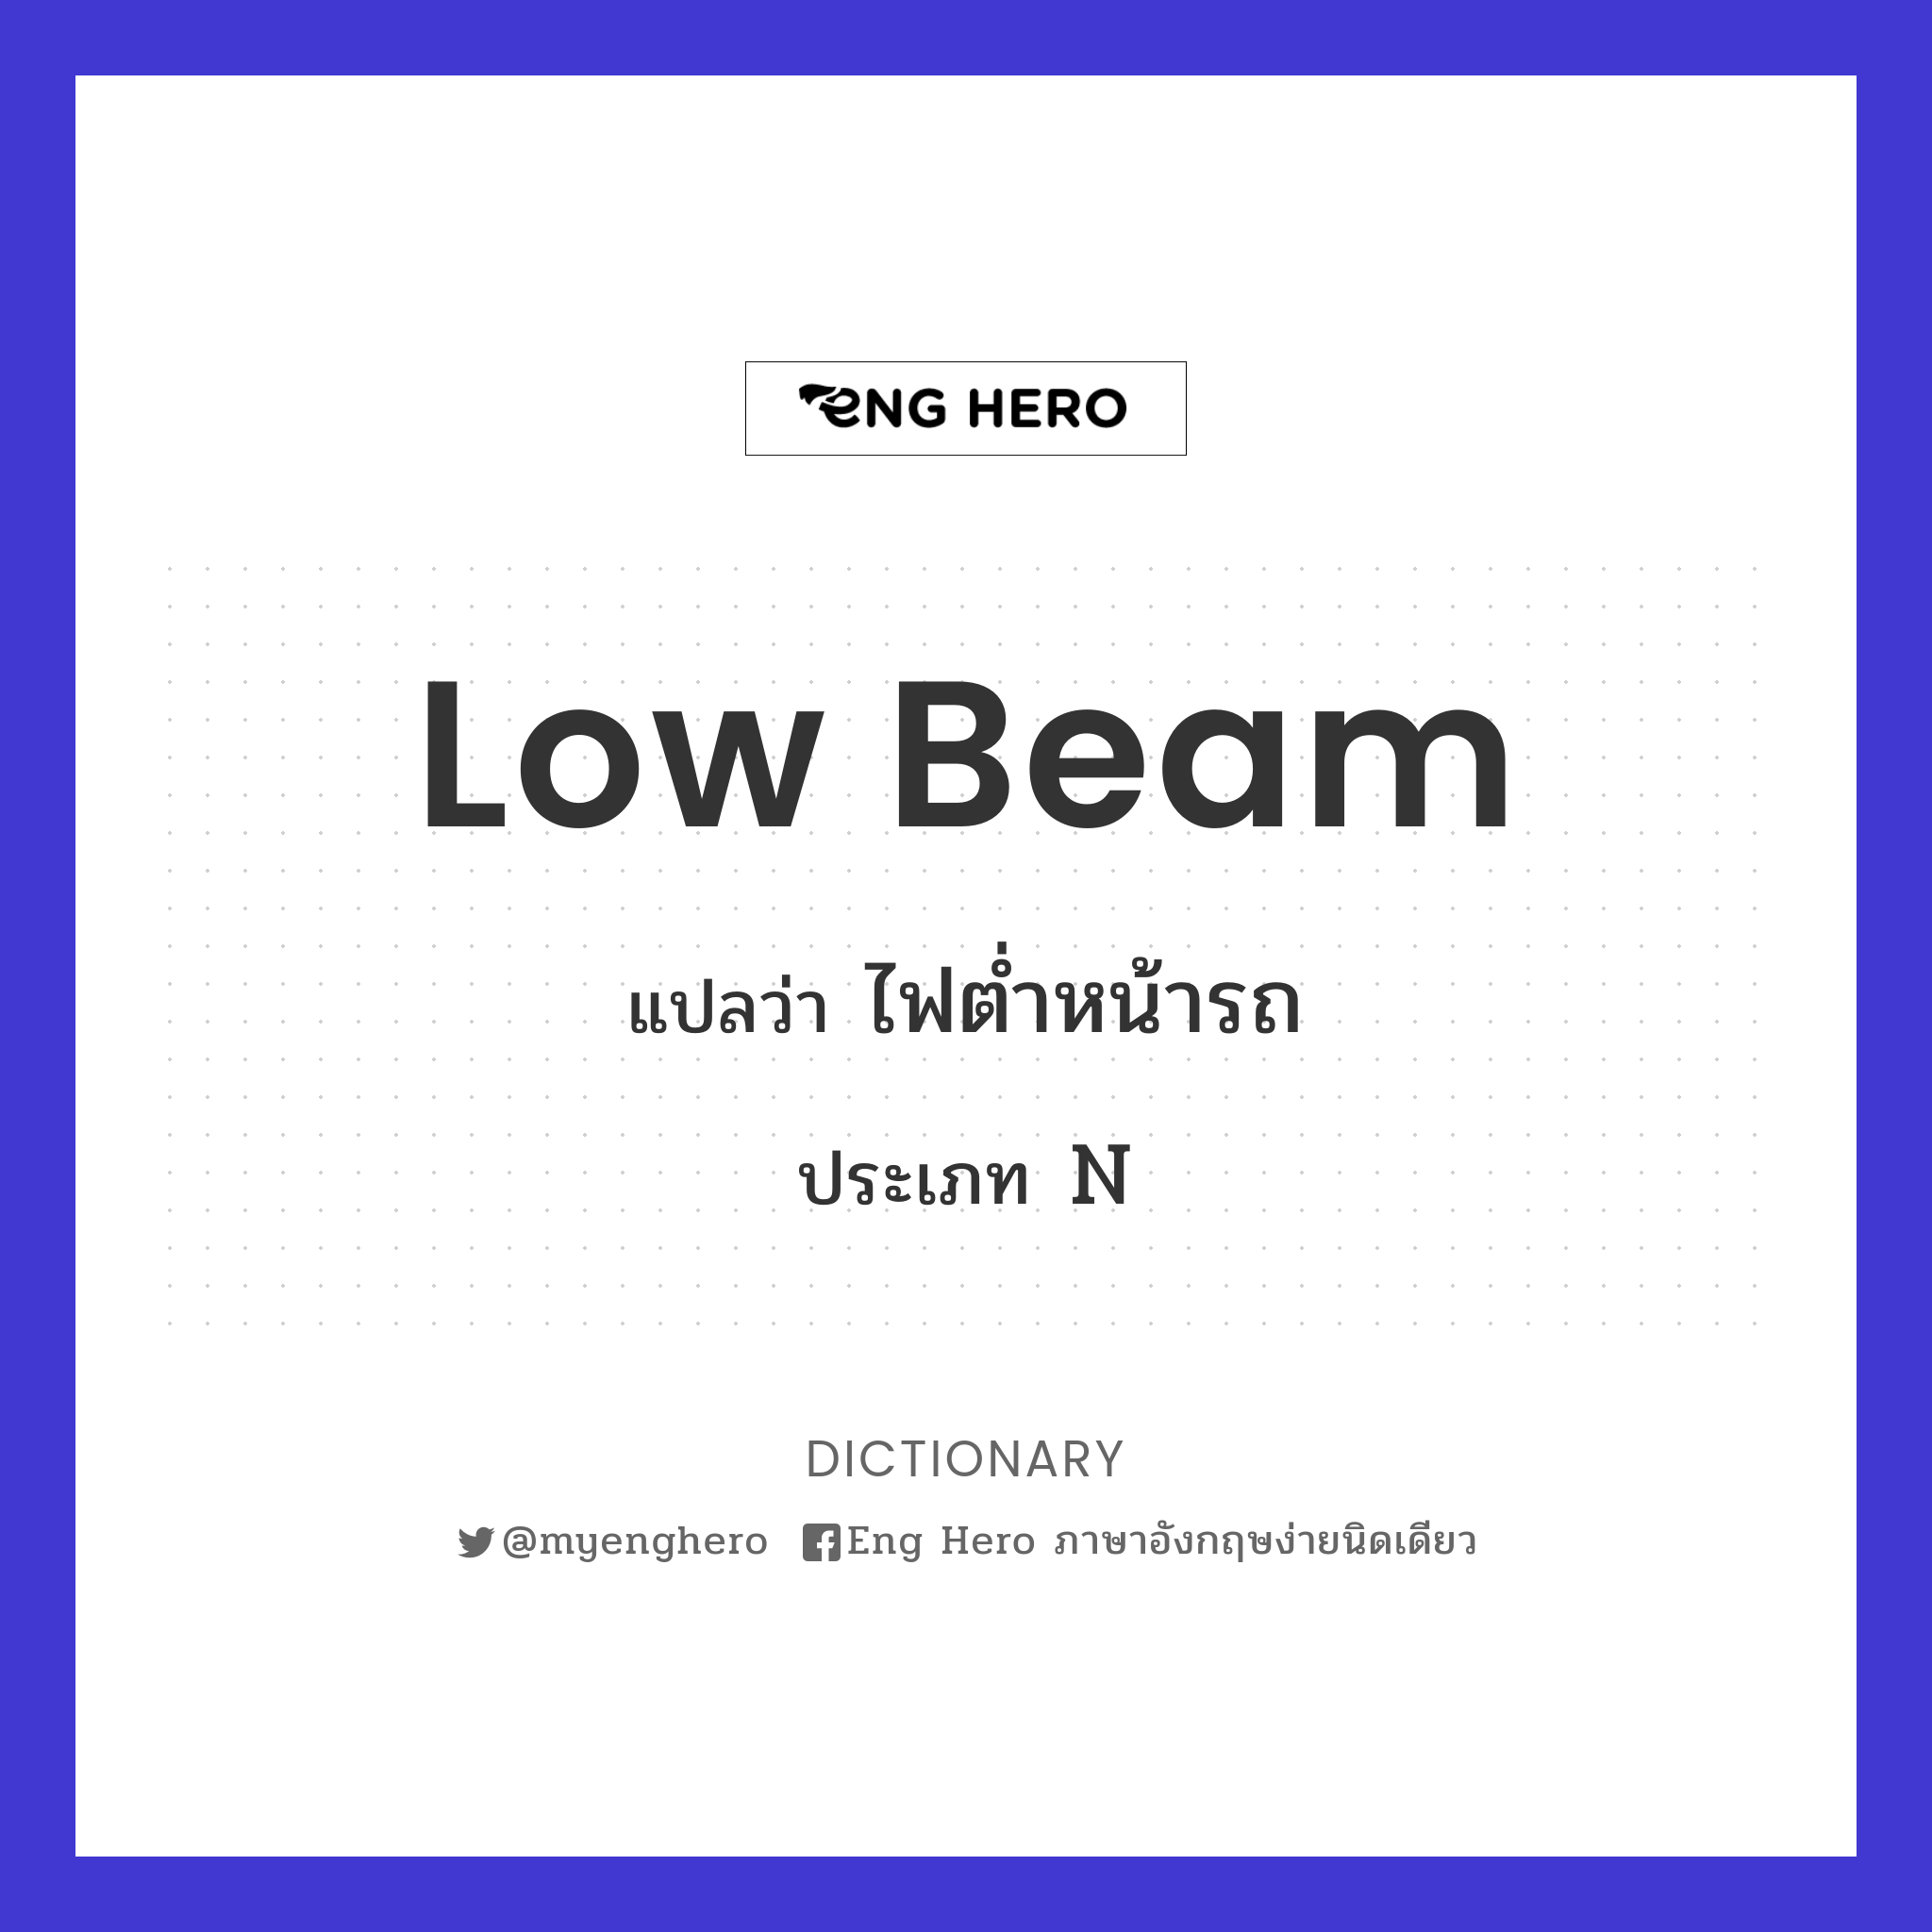 low beam